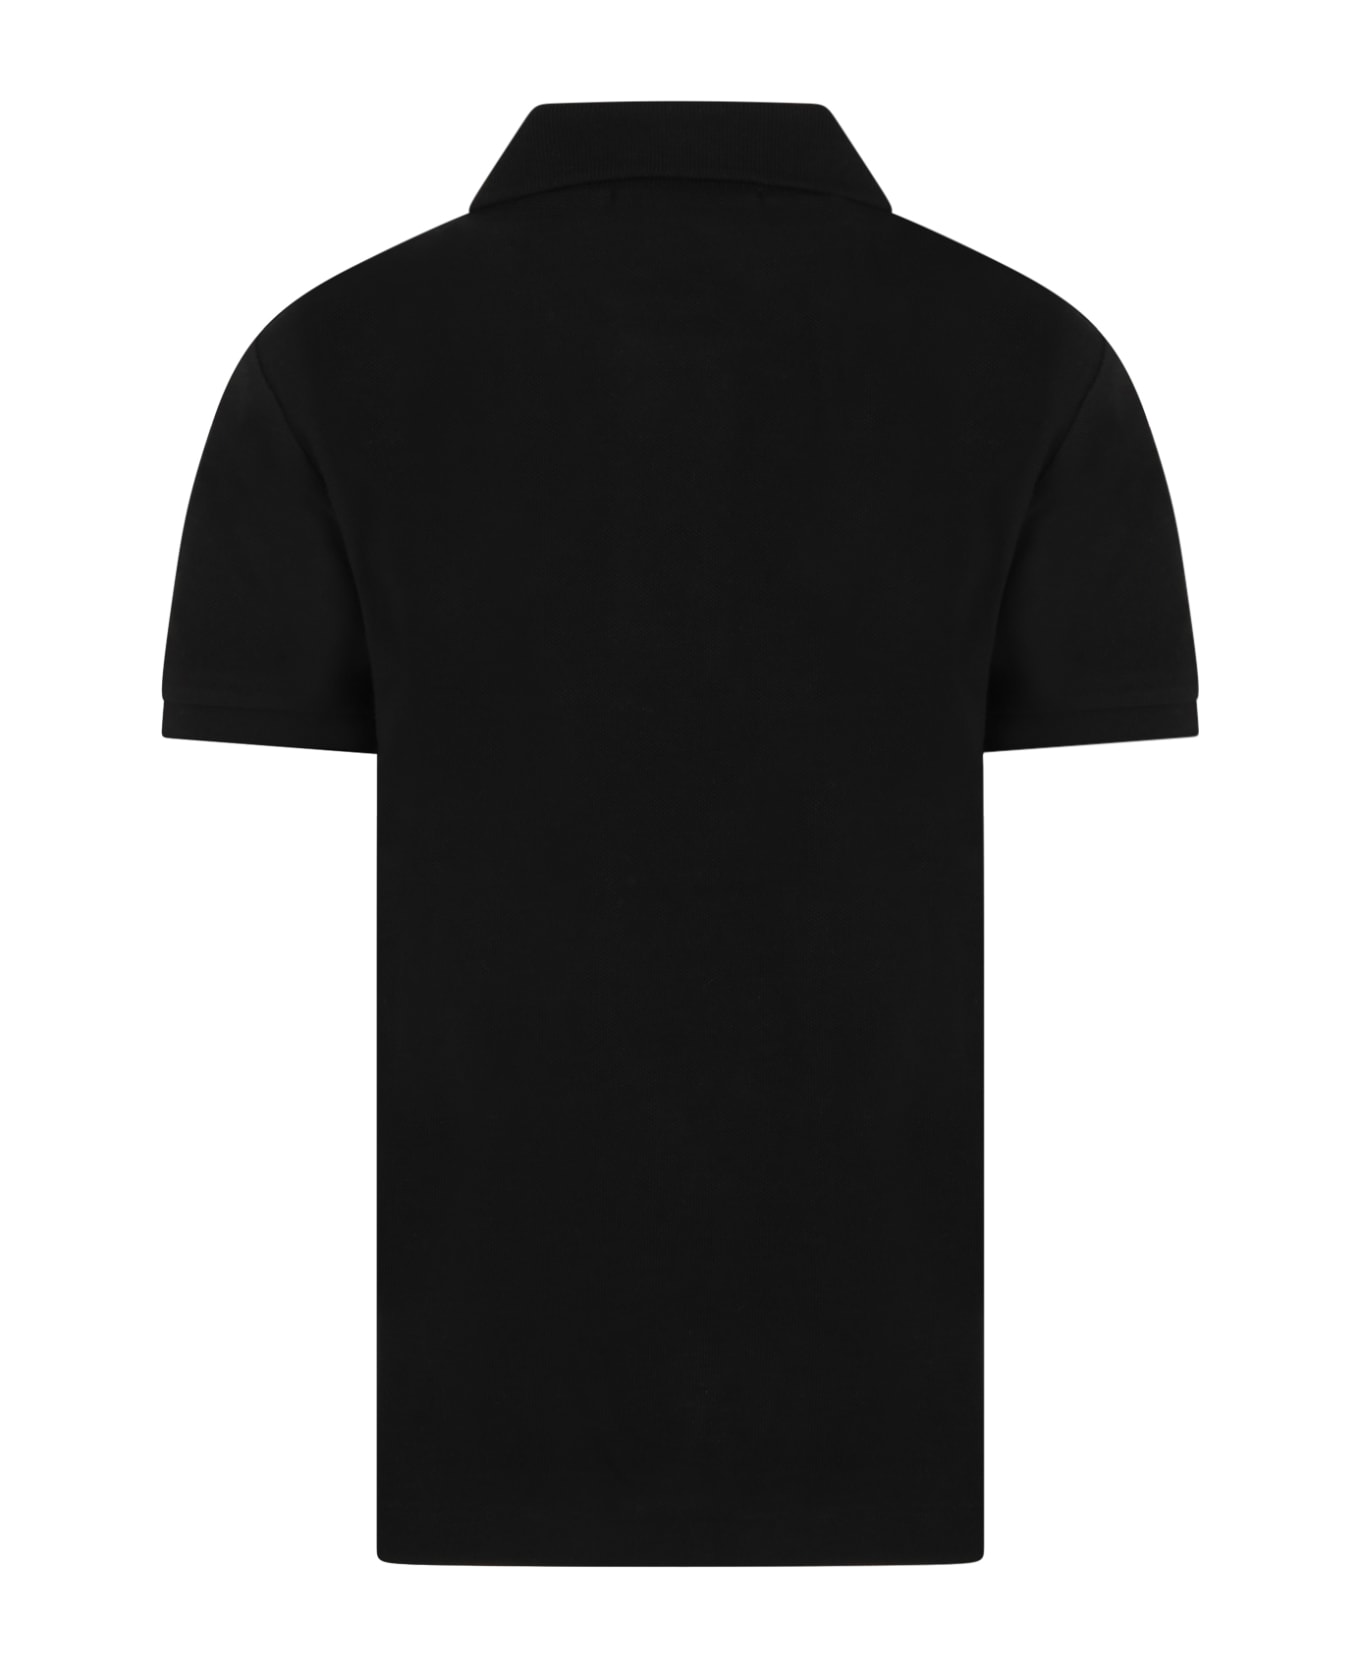 Ralph Lauren Black Polo Shirt For Boy With Pony Logo - Black